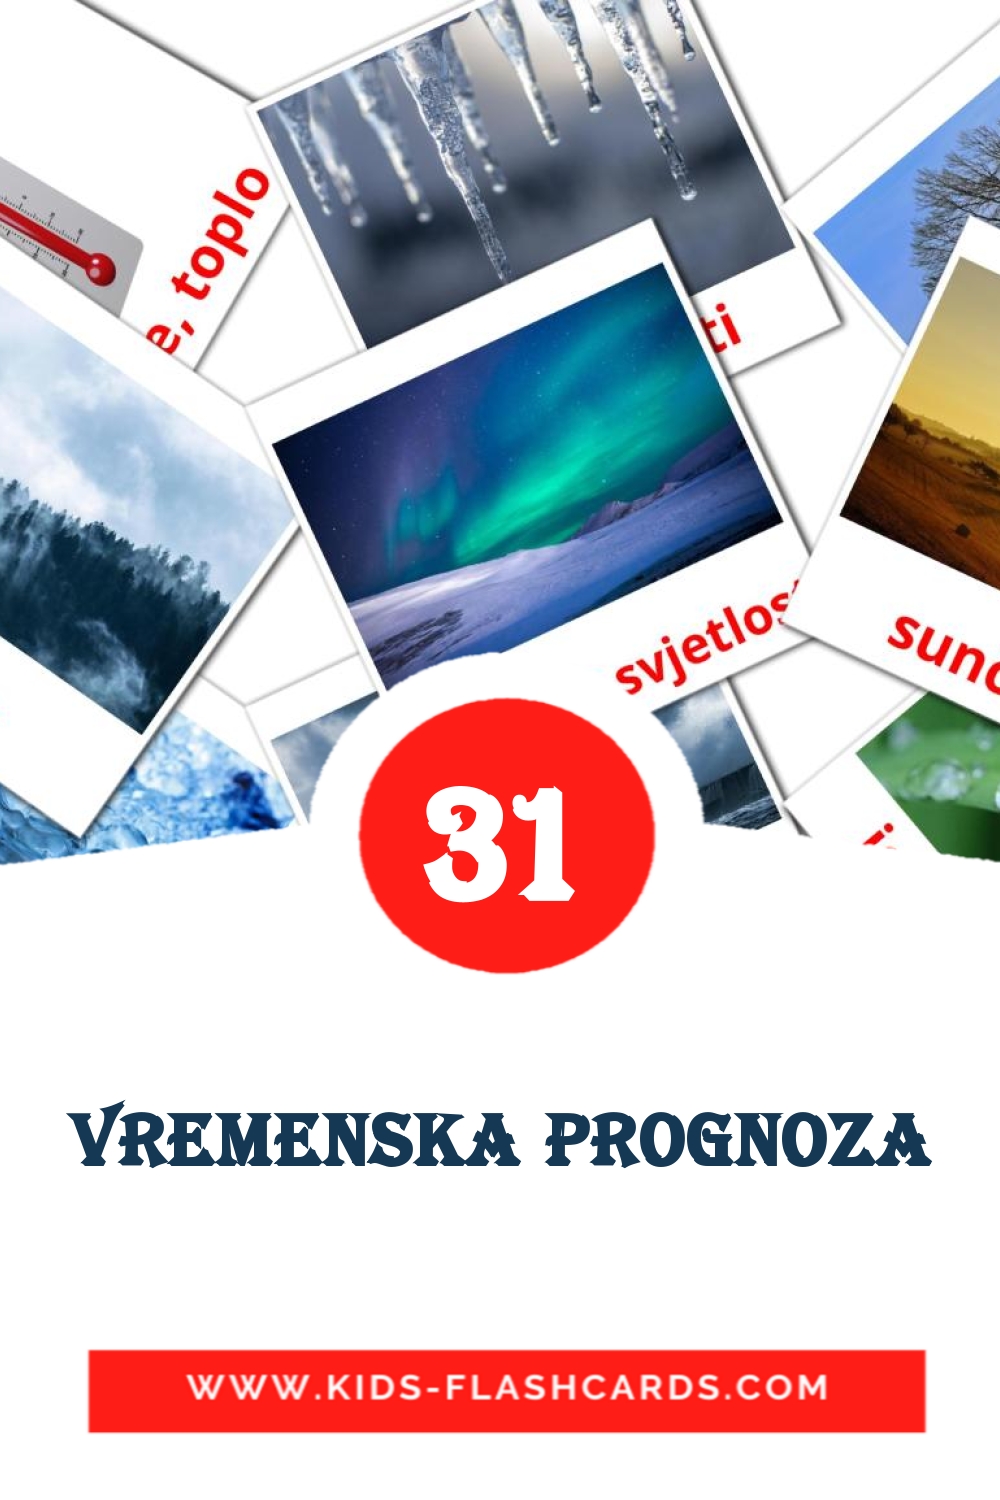 Vremenska prognoza на боснийском для Детского Сада (31 карточка)